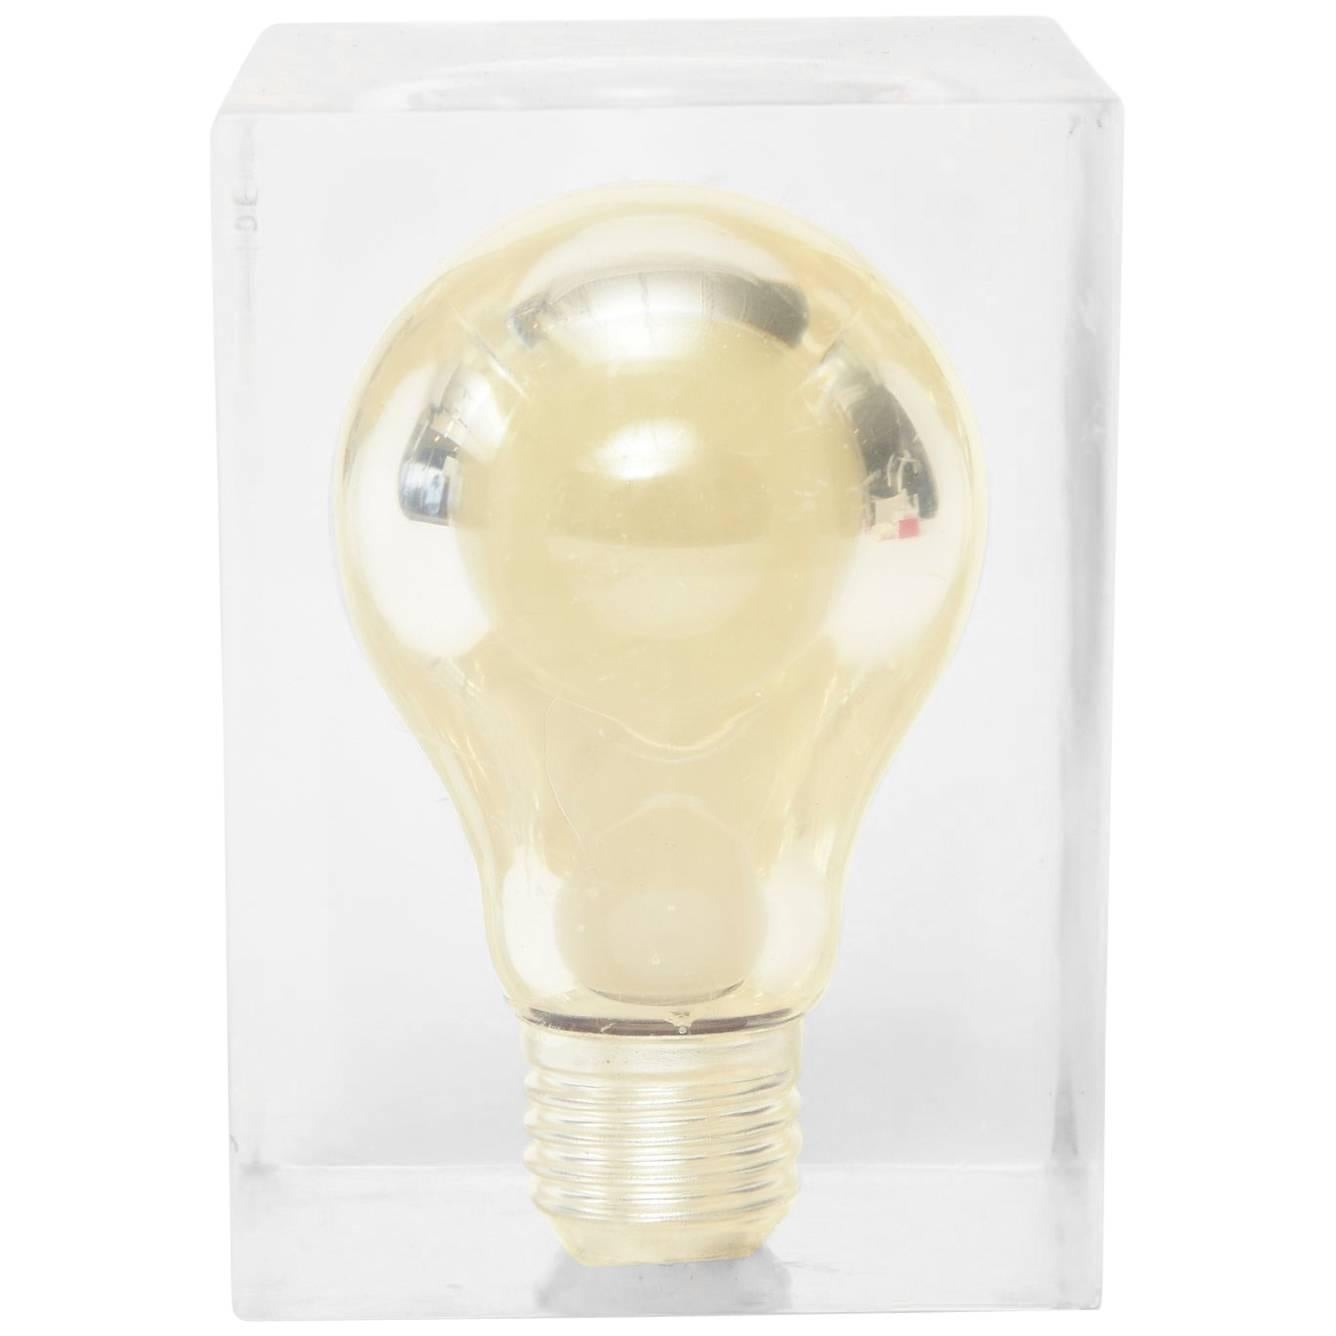 Pierre Giraudon French Pop Art Lucite Light Bulb Sculpture/ Paperweight /SALE